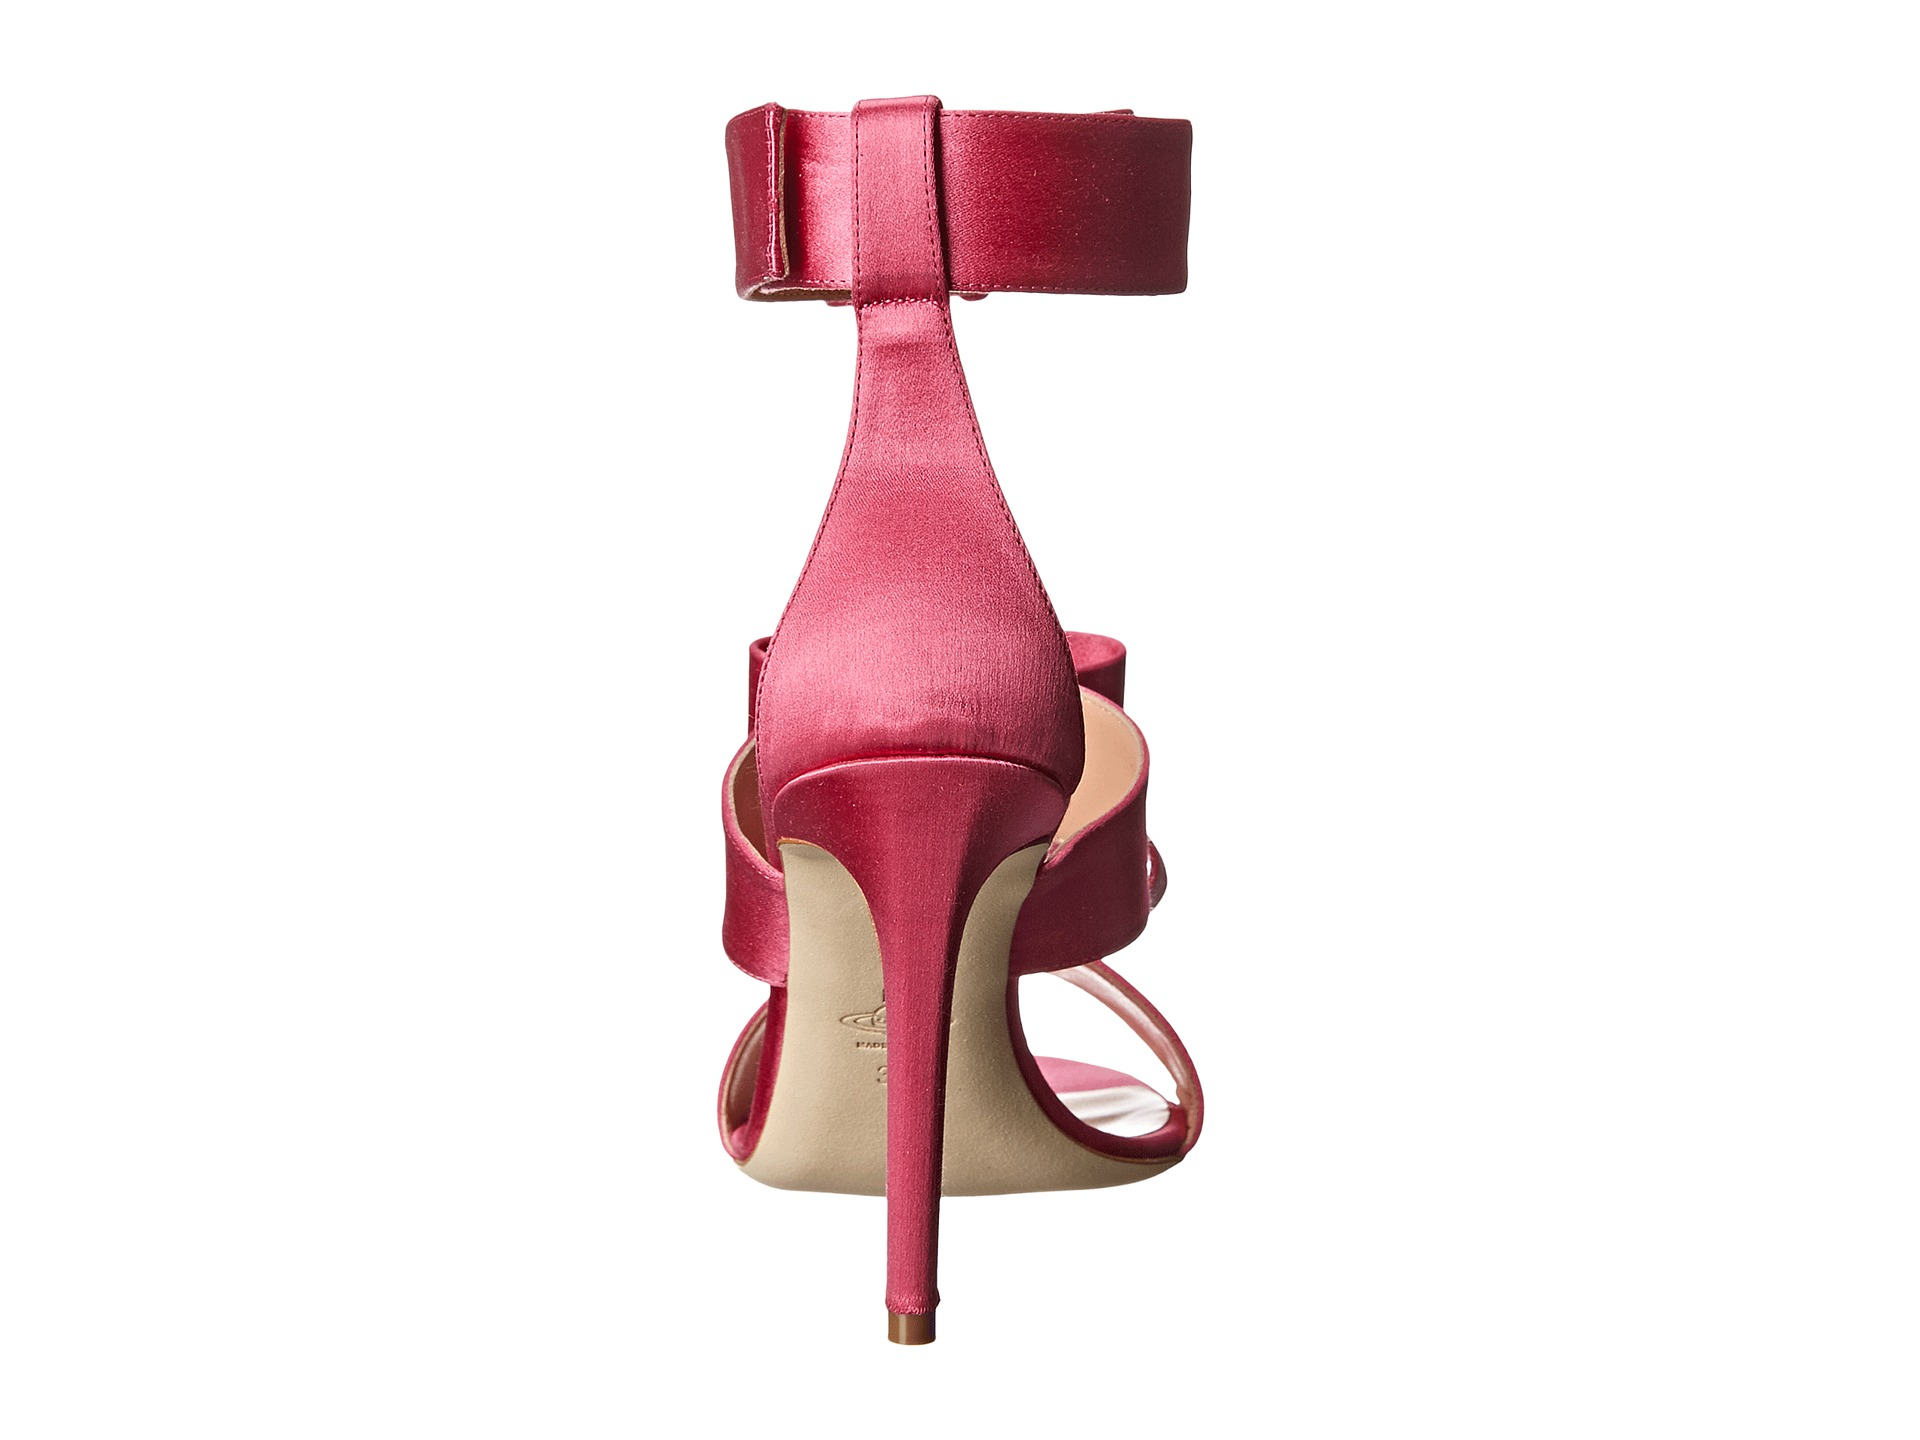 Lyst - Vivienne westwood Bow Sandal in Pink